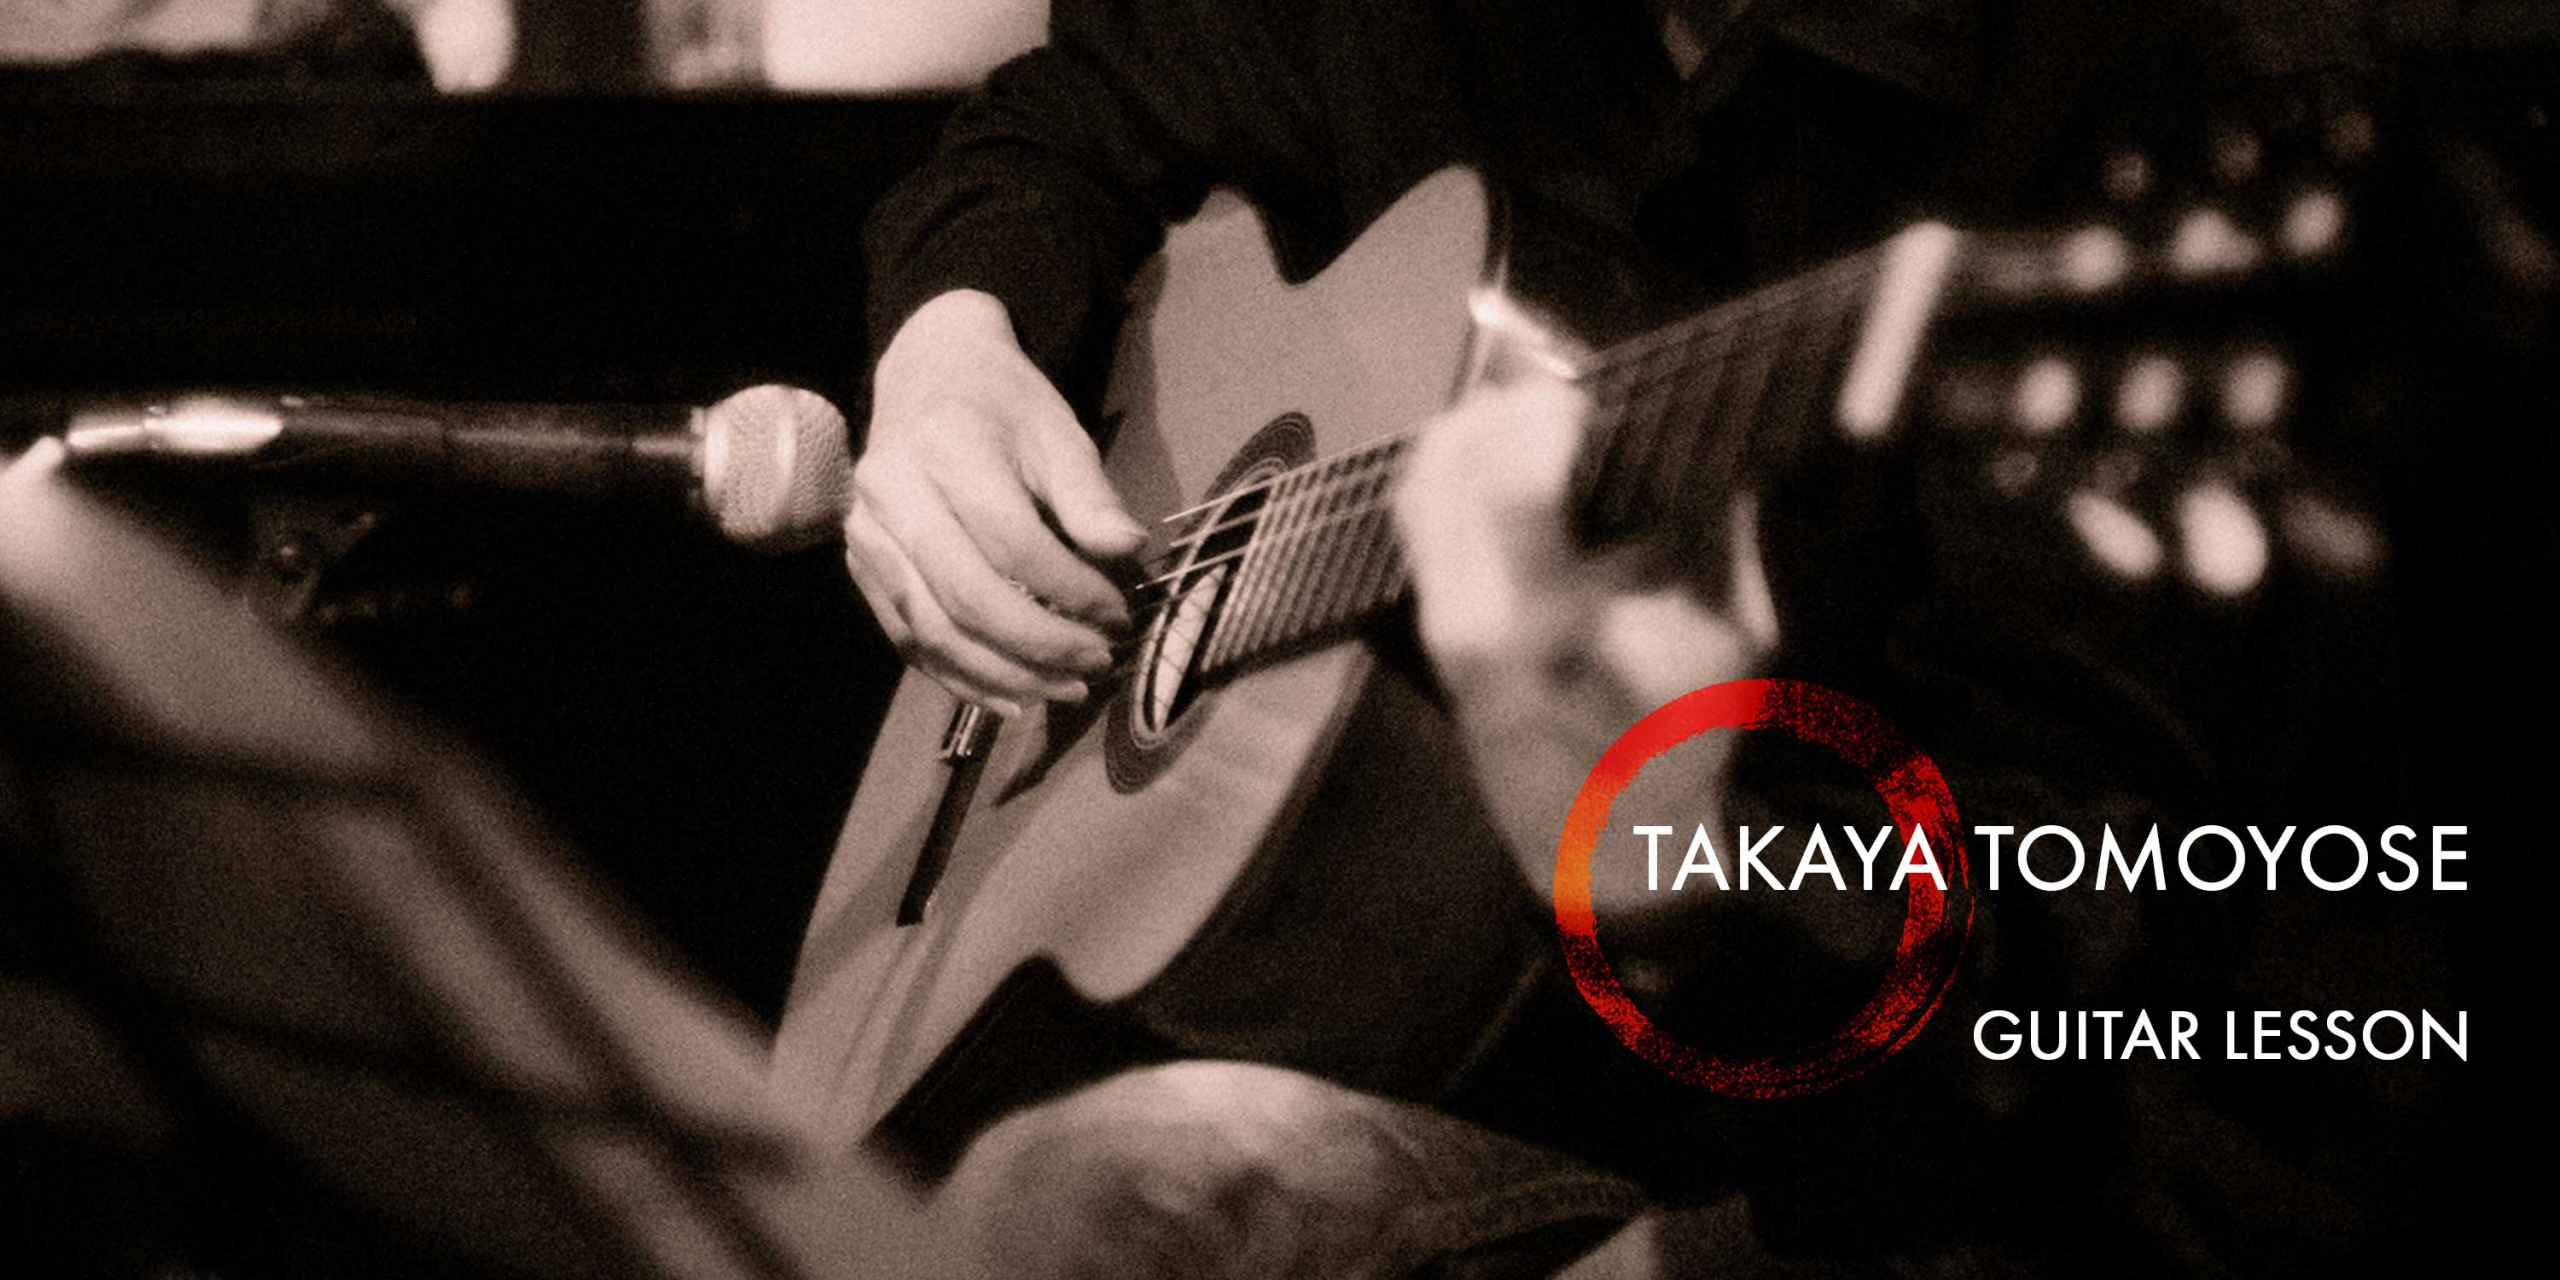 TAKAYA TOMOYOSE GUITAR LESSON | 沖縄を拠点に活動しているギタリスト友寄隆哉のHP